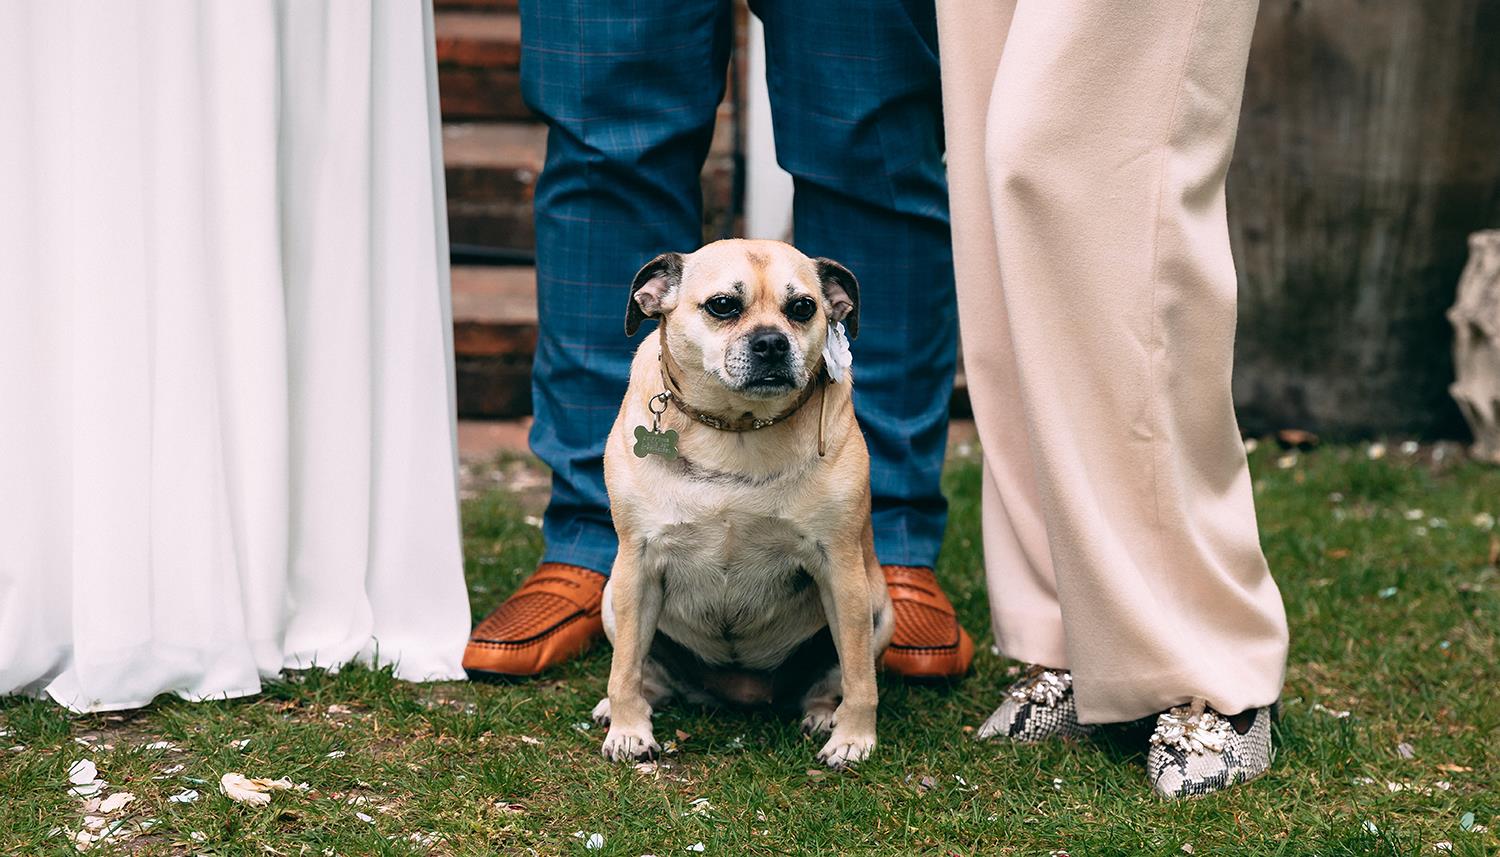 Dog accompanied by wedding guests. Photo Credit: F J West 